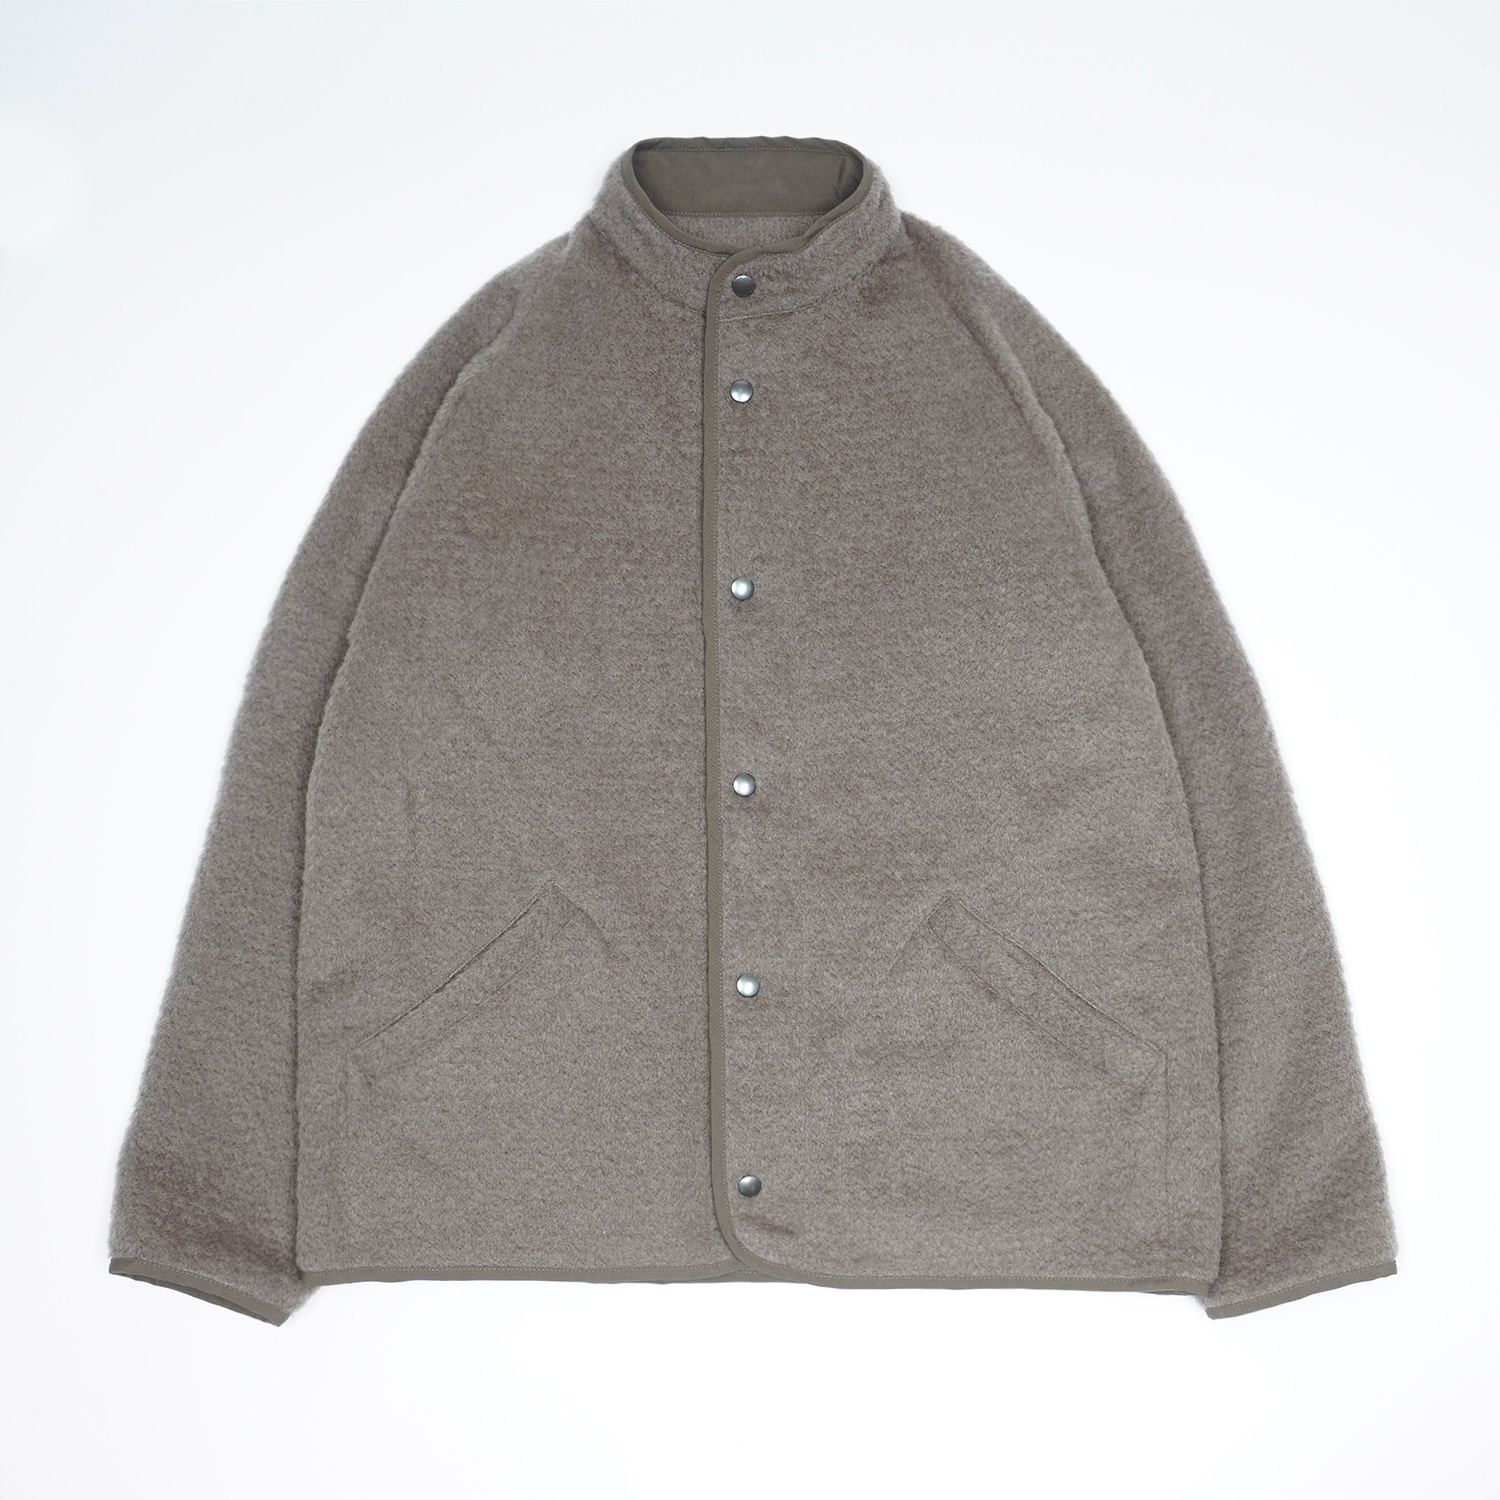 CONTOUR Jacket in Warm grey color by Arpenteur